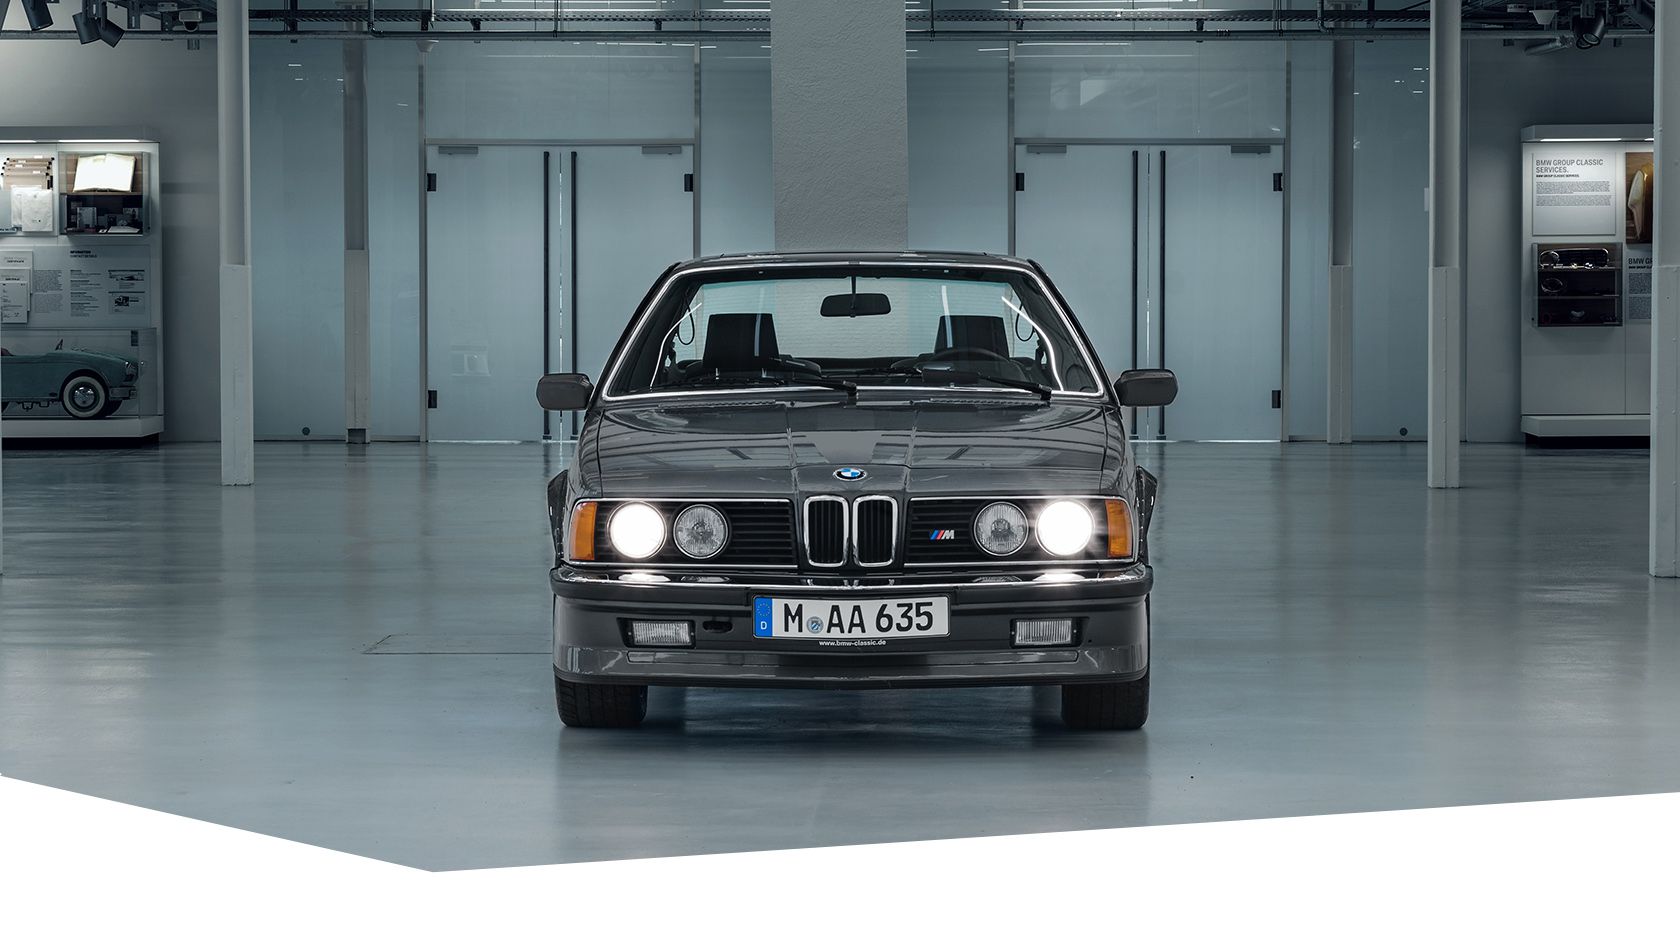 BMW M635CSi model of the E24 series